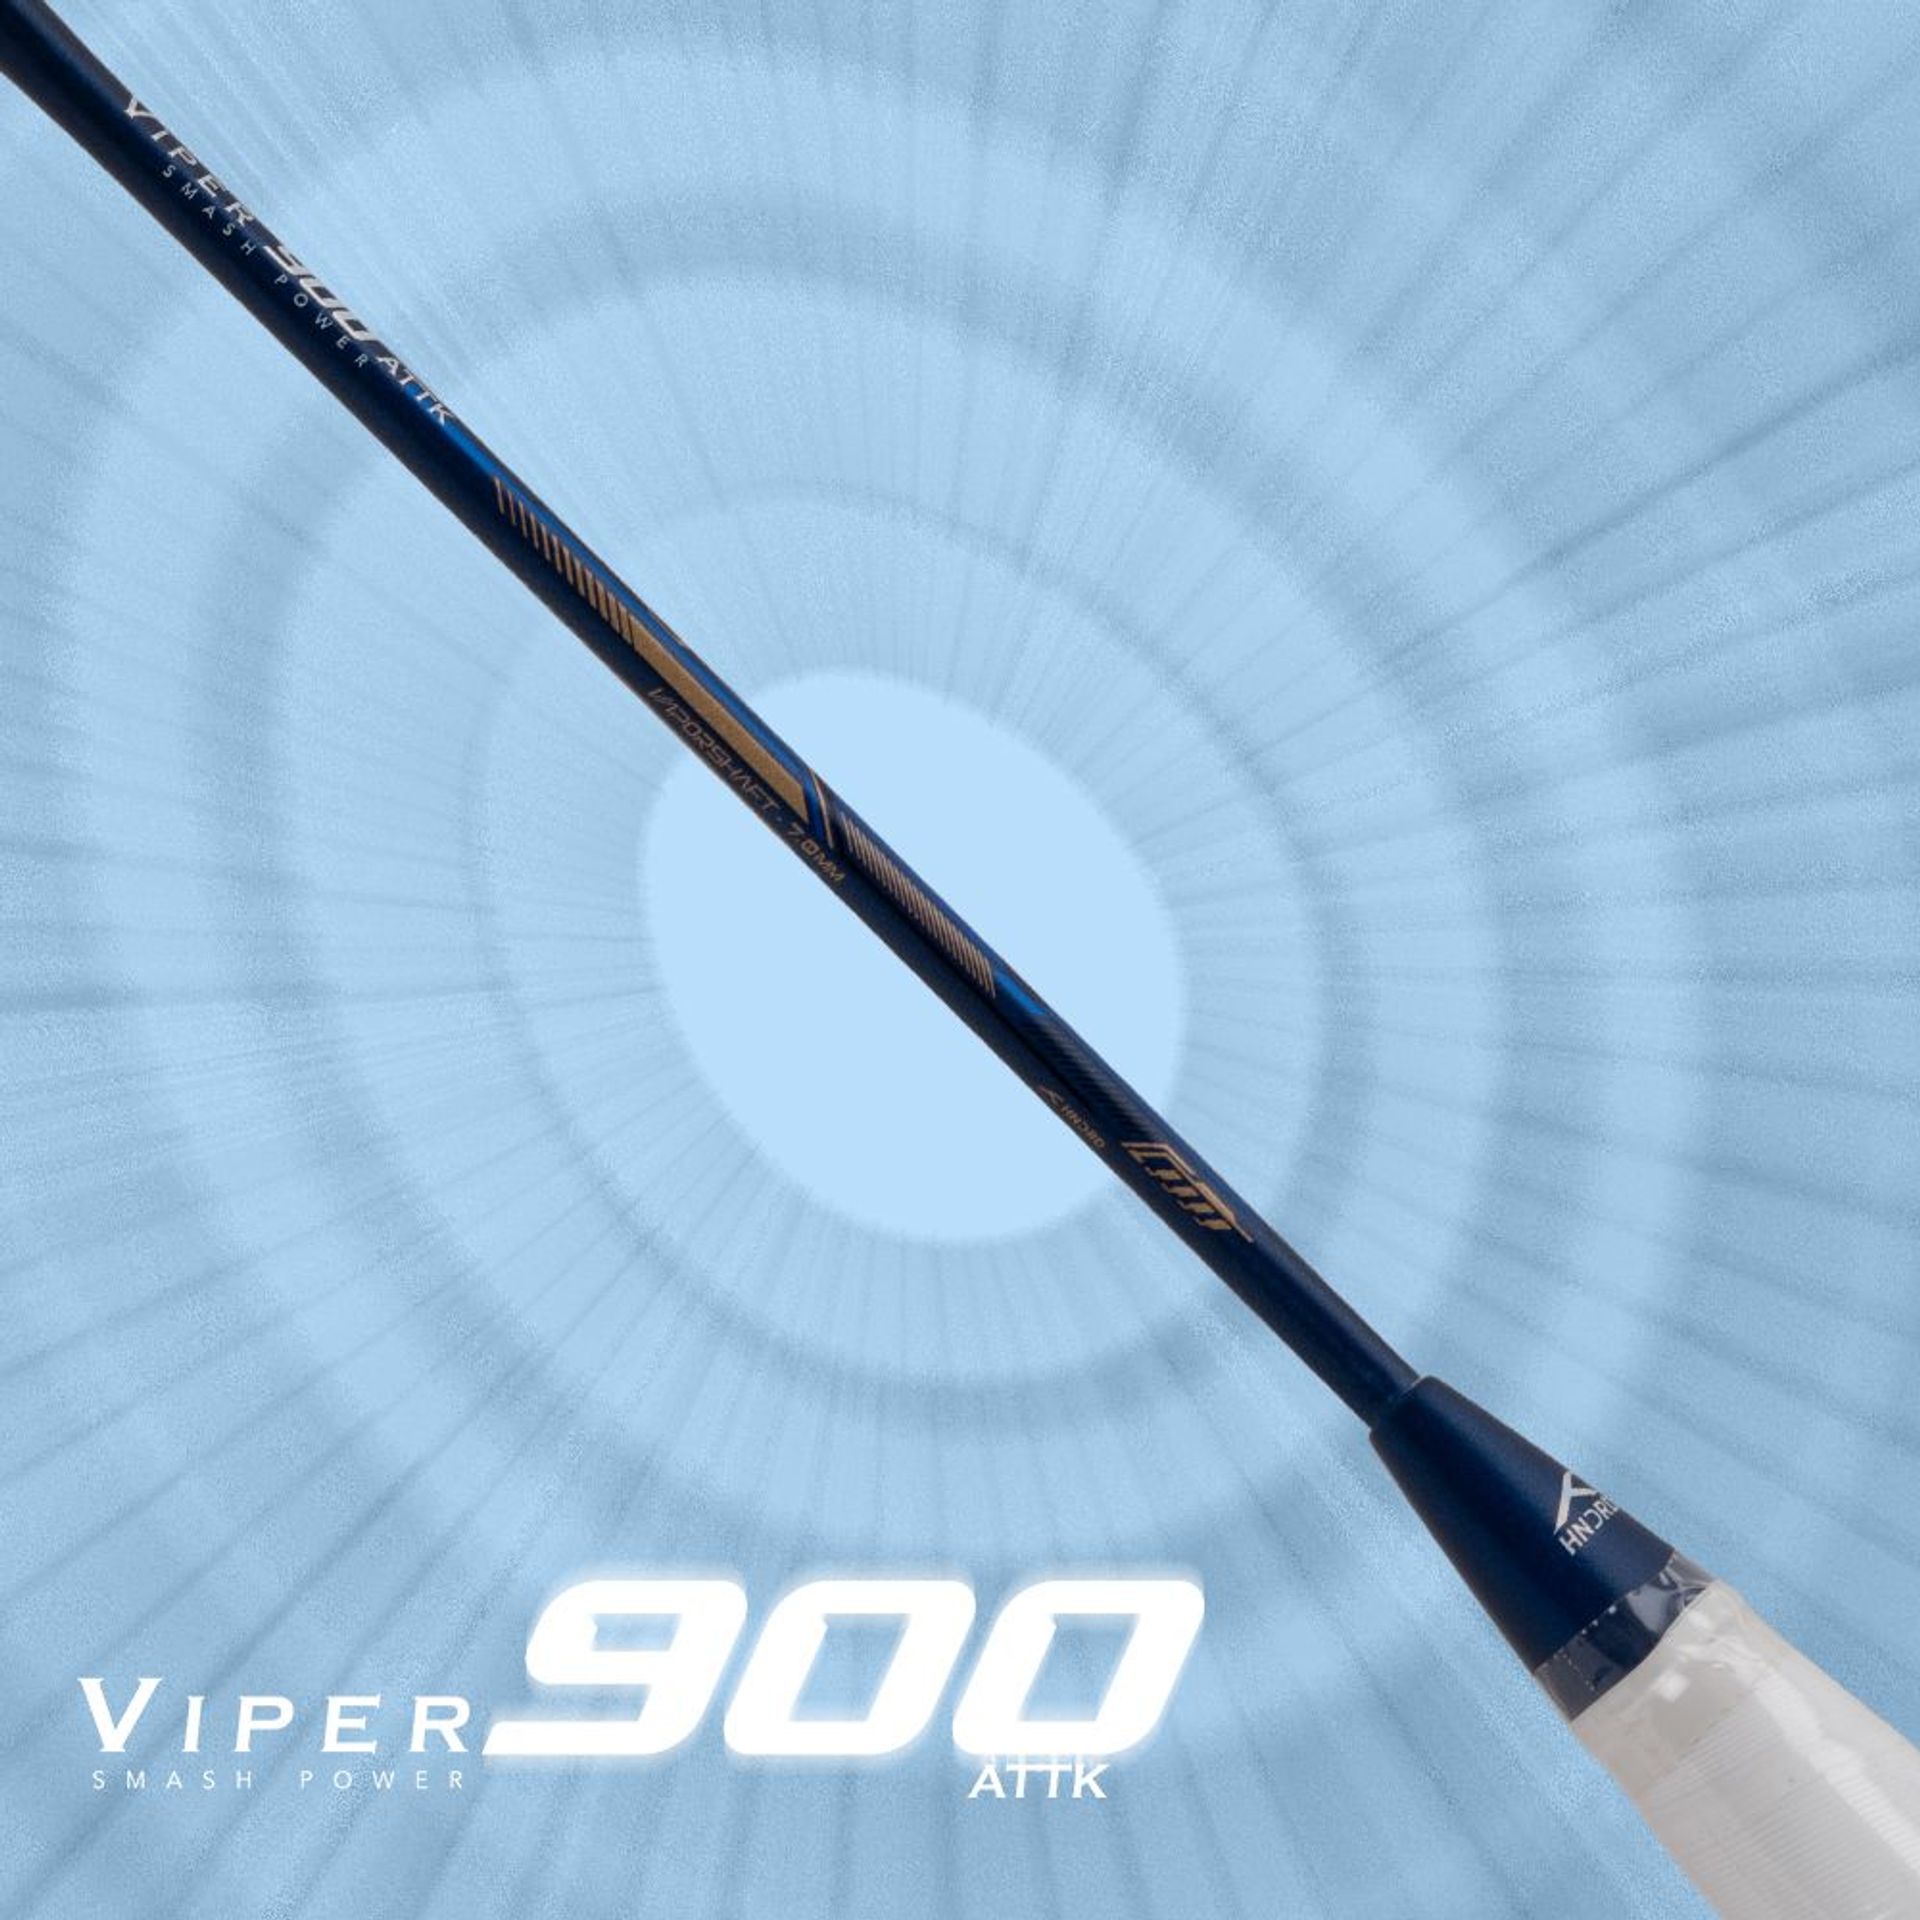 Viper 900 - Badminton Racket - Graphite Lab